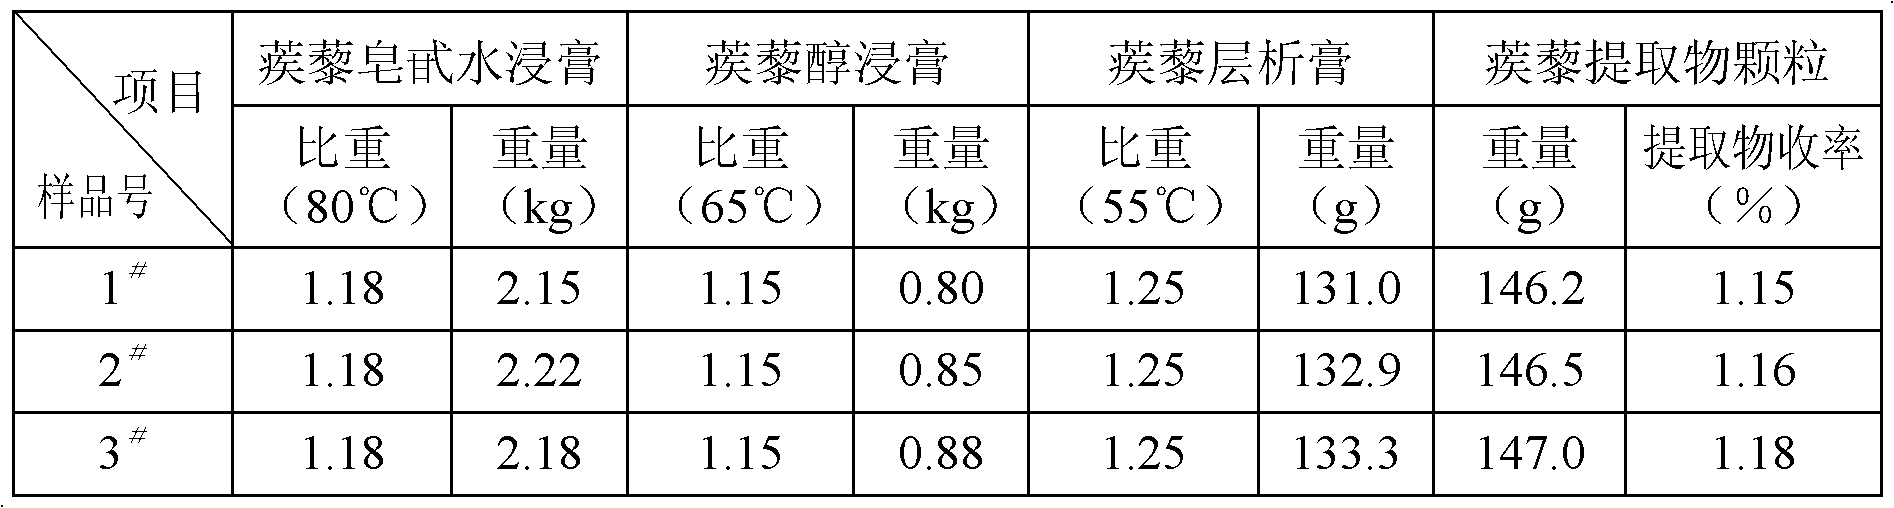 Preparation method of Xinnaoshutong tablet